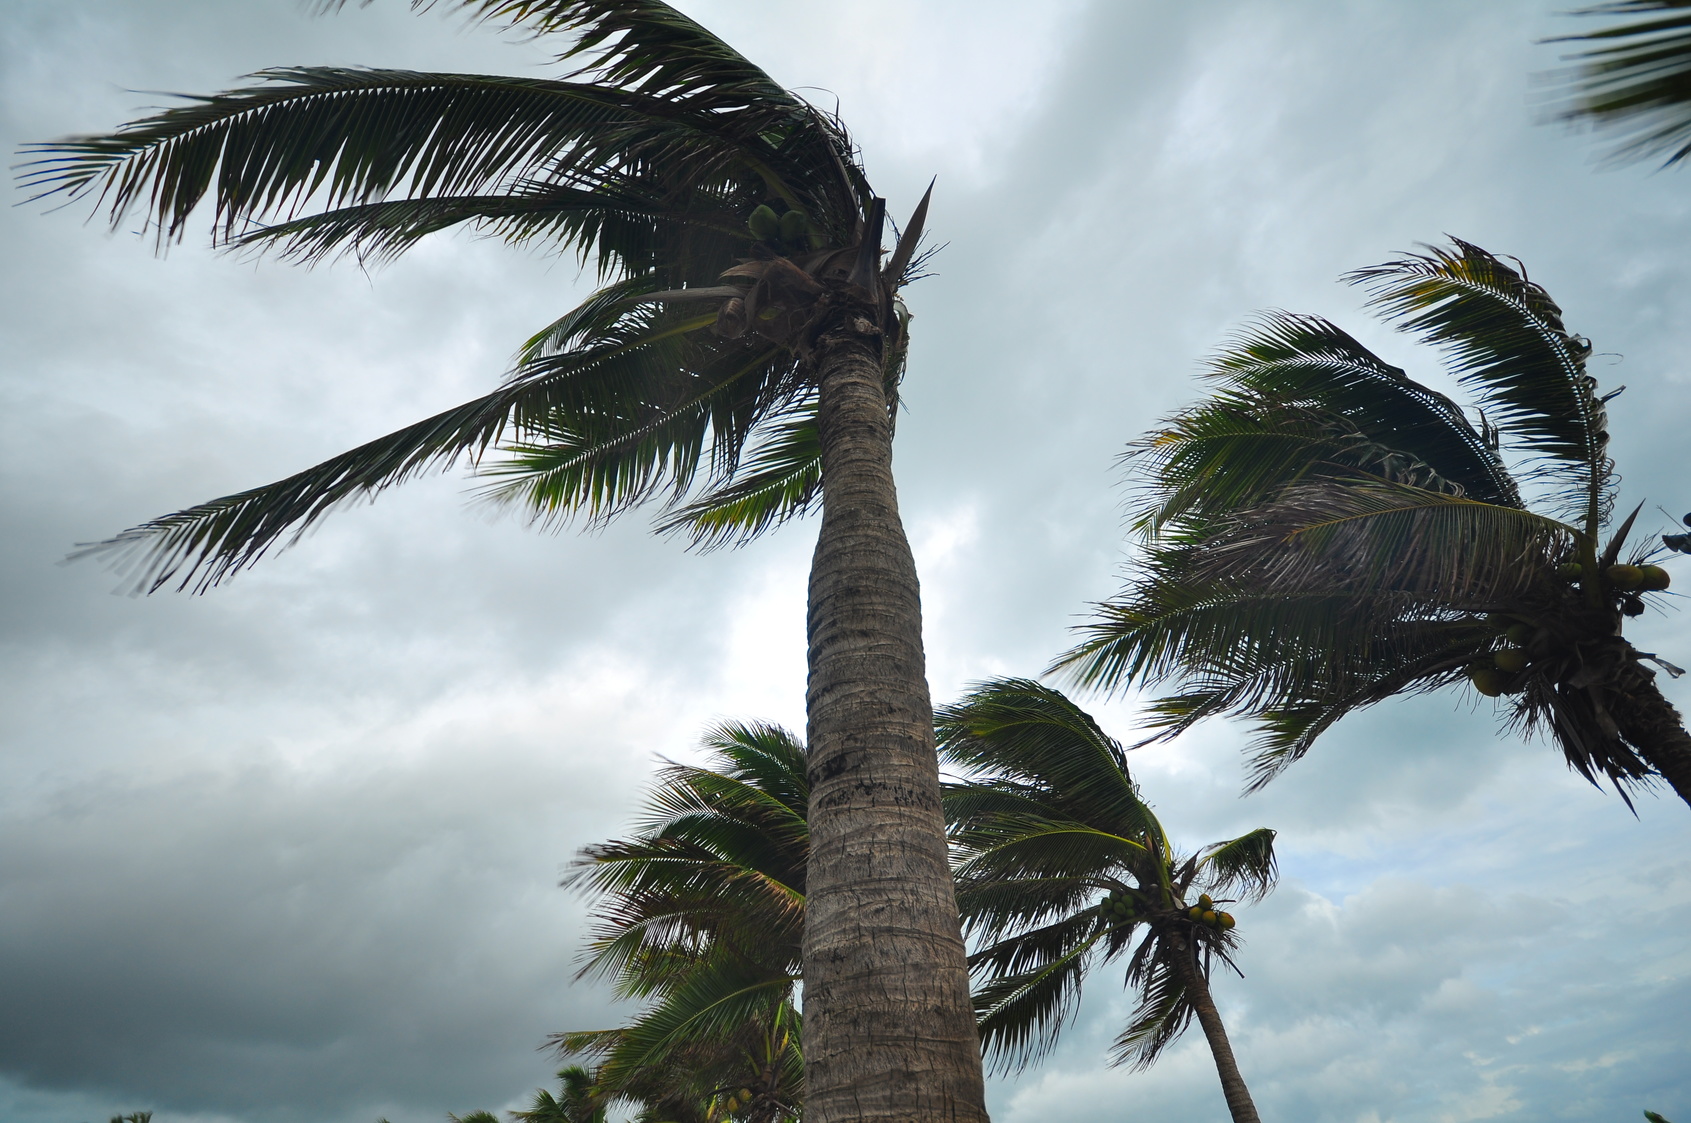 Insured losses for subtropical storm Alberto total $50 million